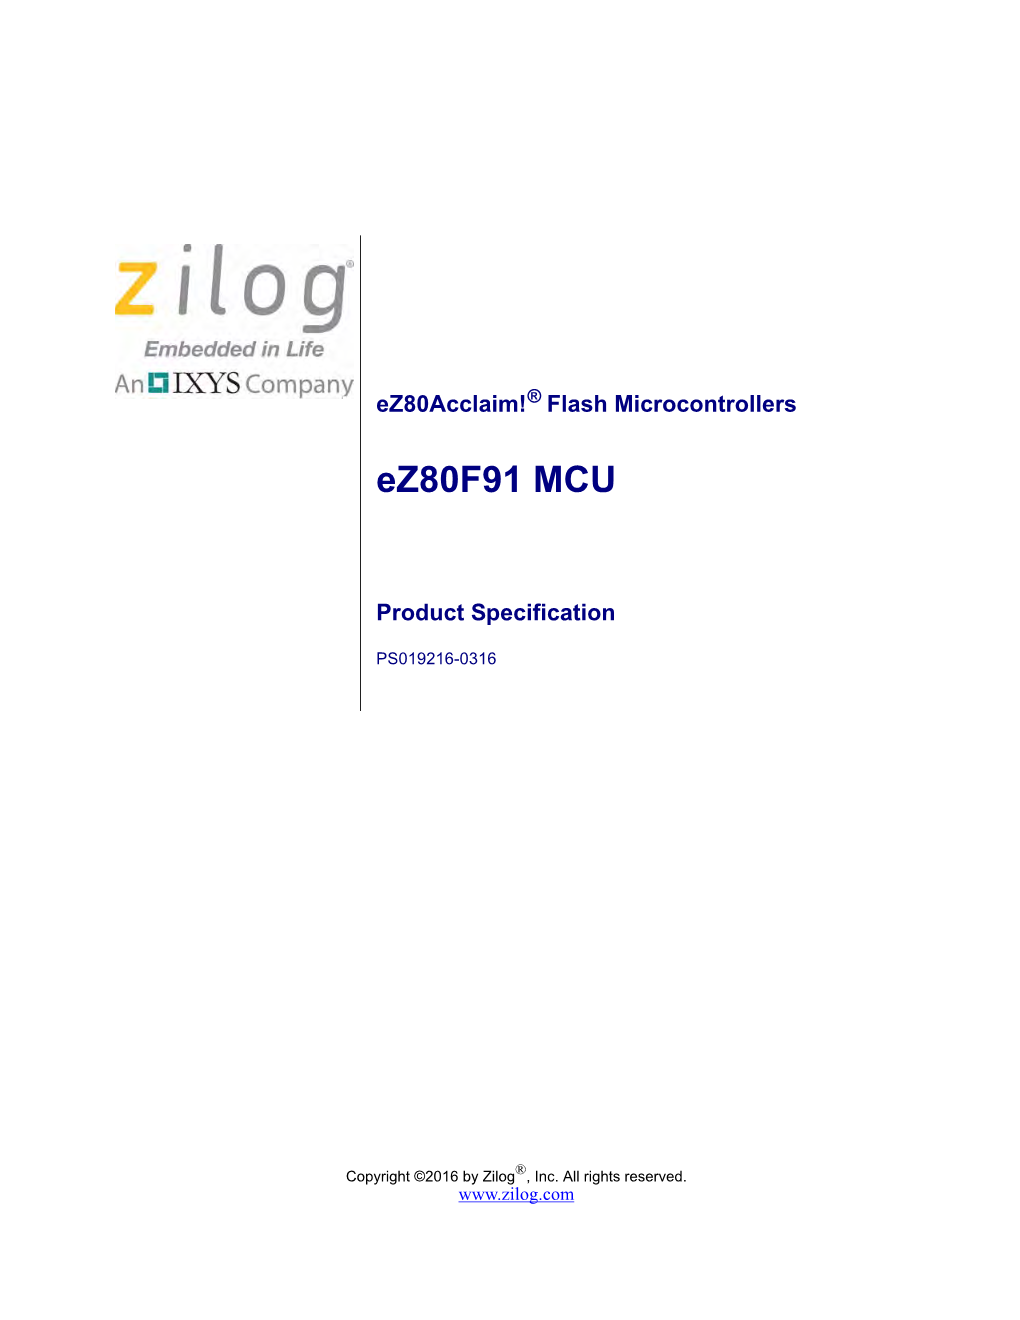 Ez80f91 MCU Product Specification